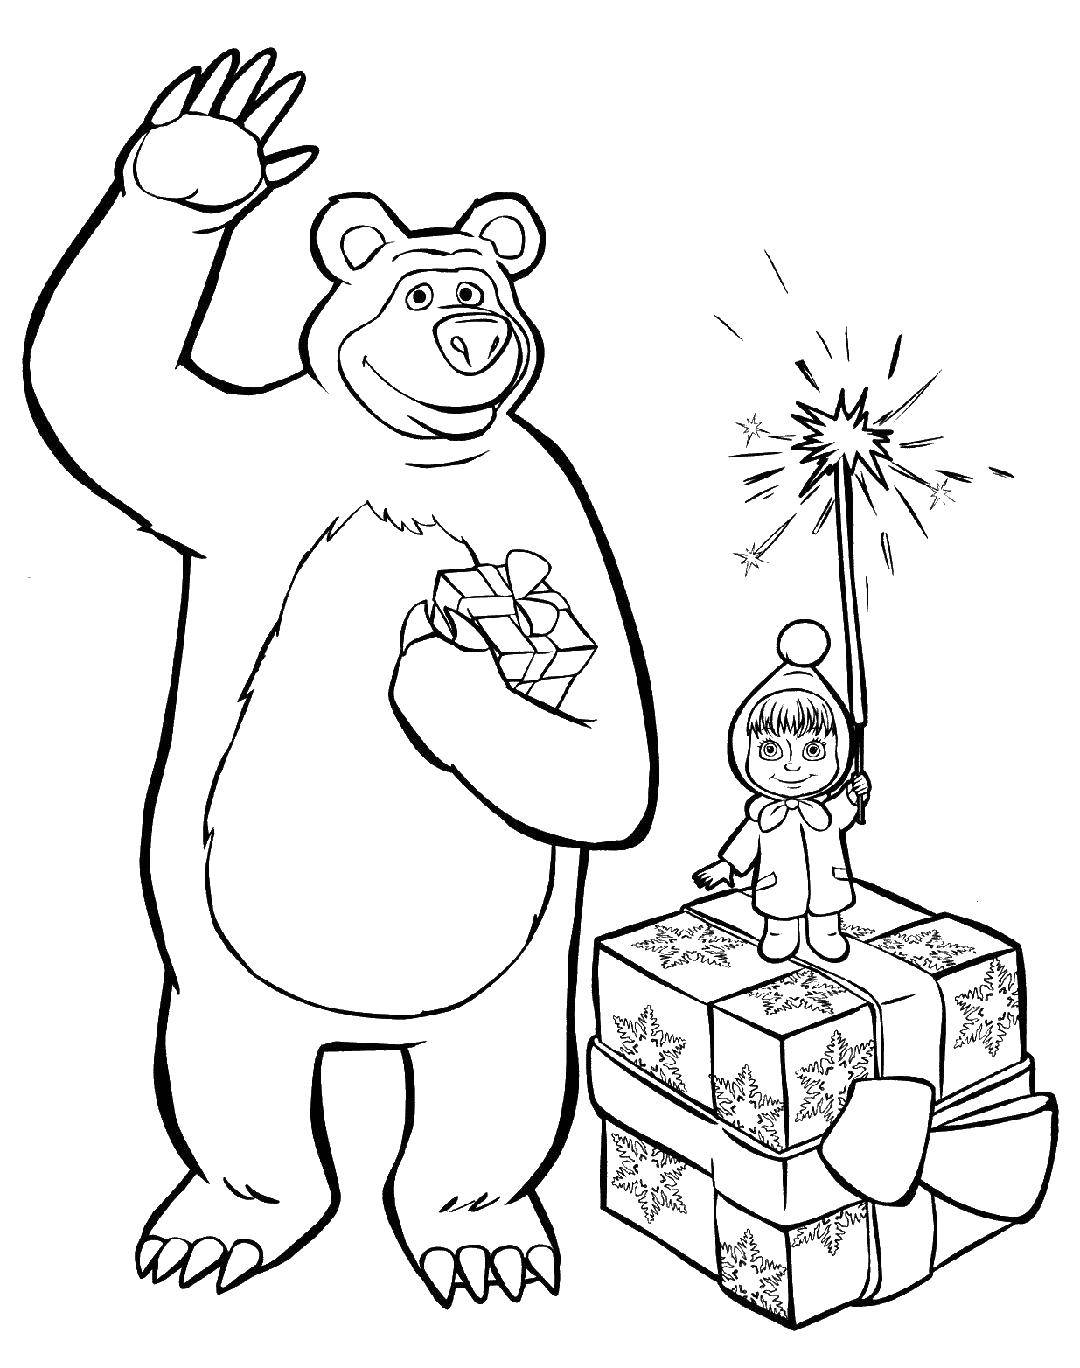 Coloring Masha and the bear. Category fireworks. Tags:  Cartoon character, Masha and the Bear.